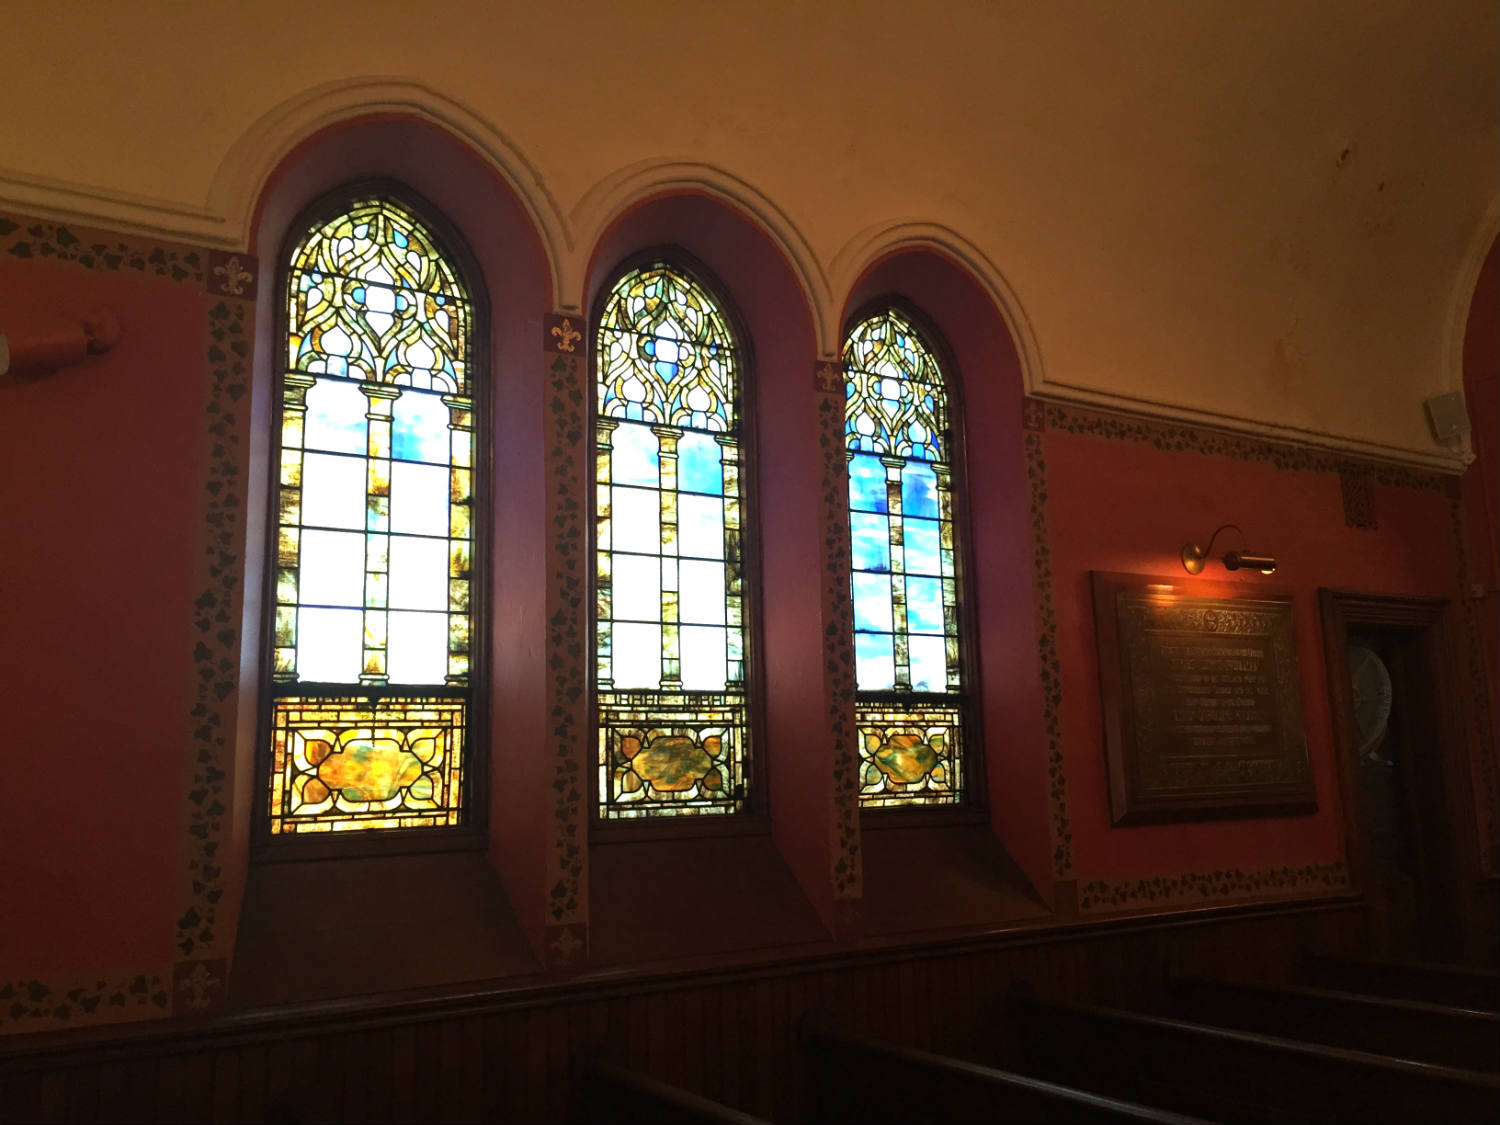 Tiffany Windows in the Pullman Memorial Universalist Church in Albion